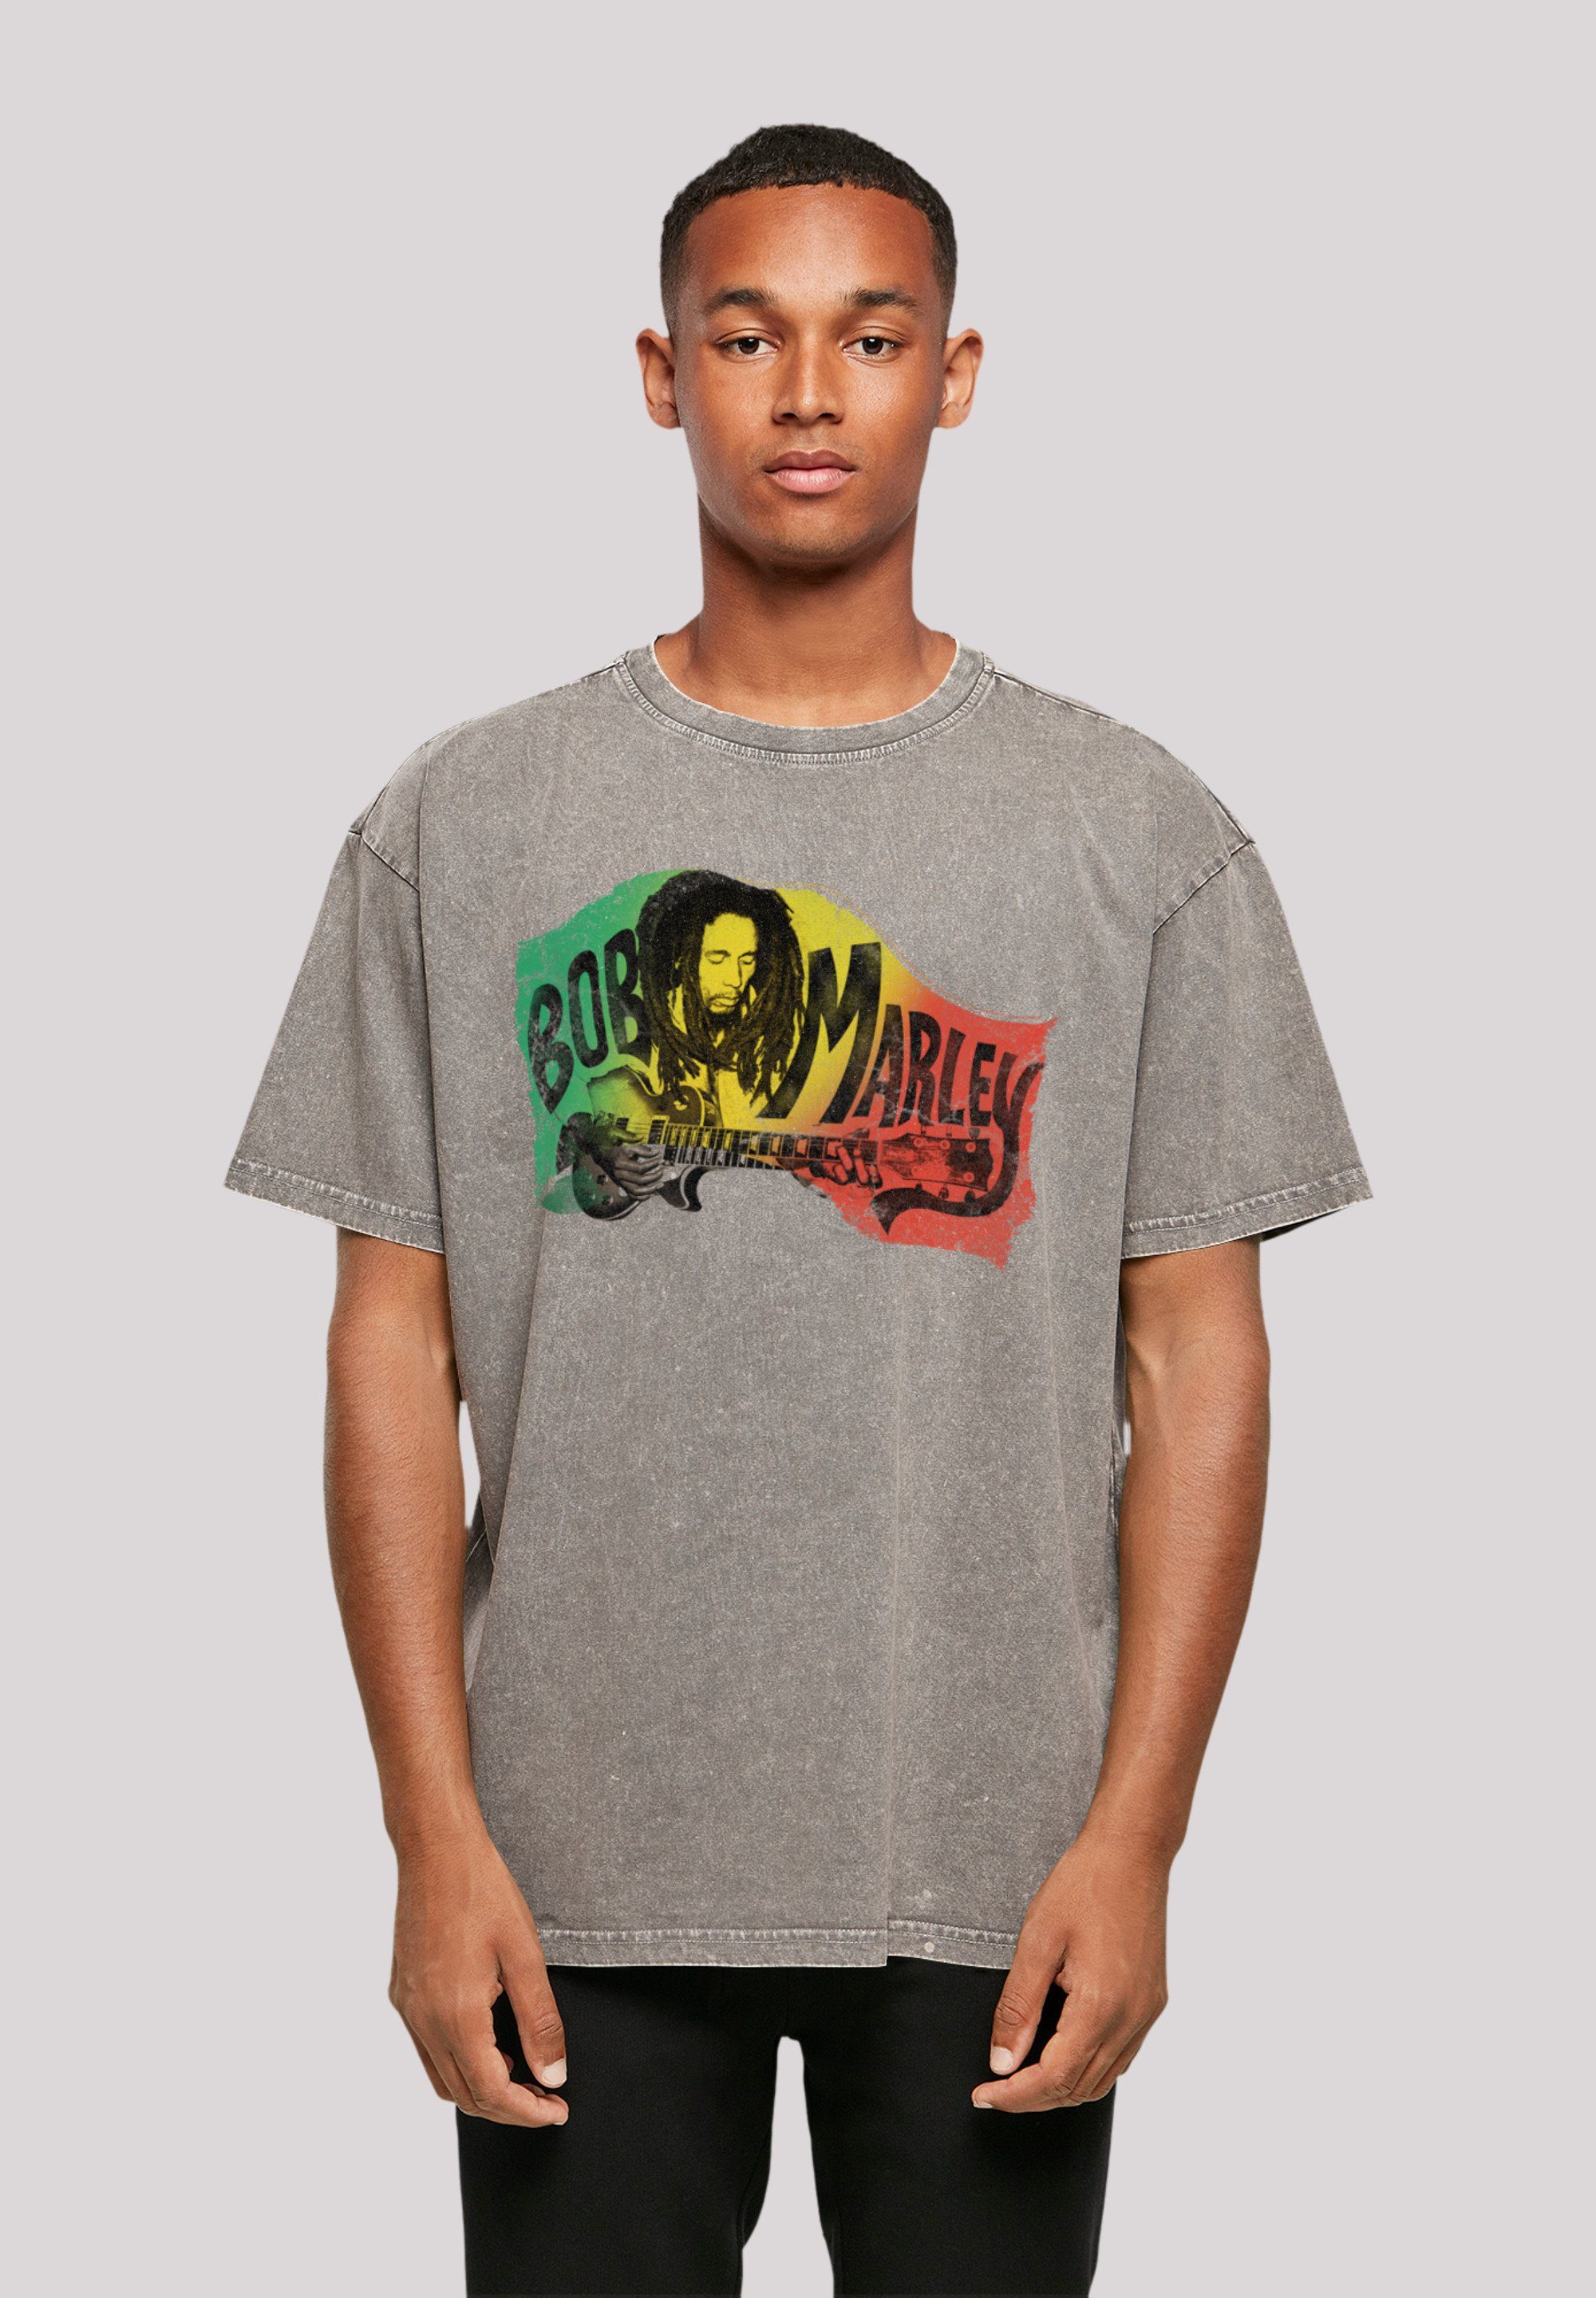 F4NT4STIC T-Shirt Bob Marley Chords Musik, Off Reggae By Asphalt Rock Qualität, Music Premium